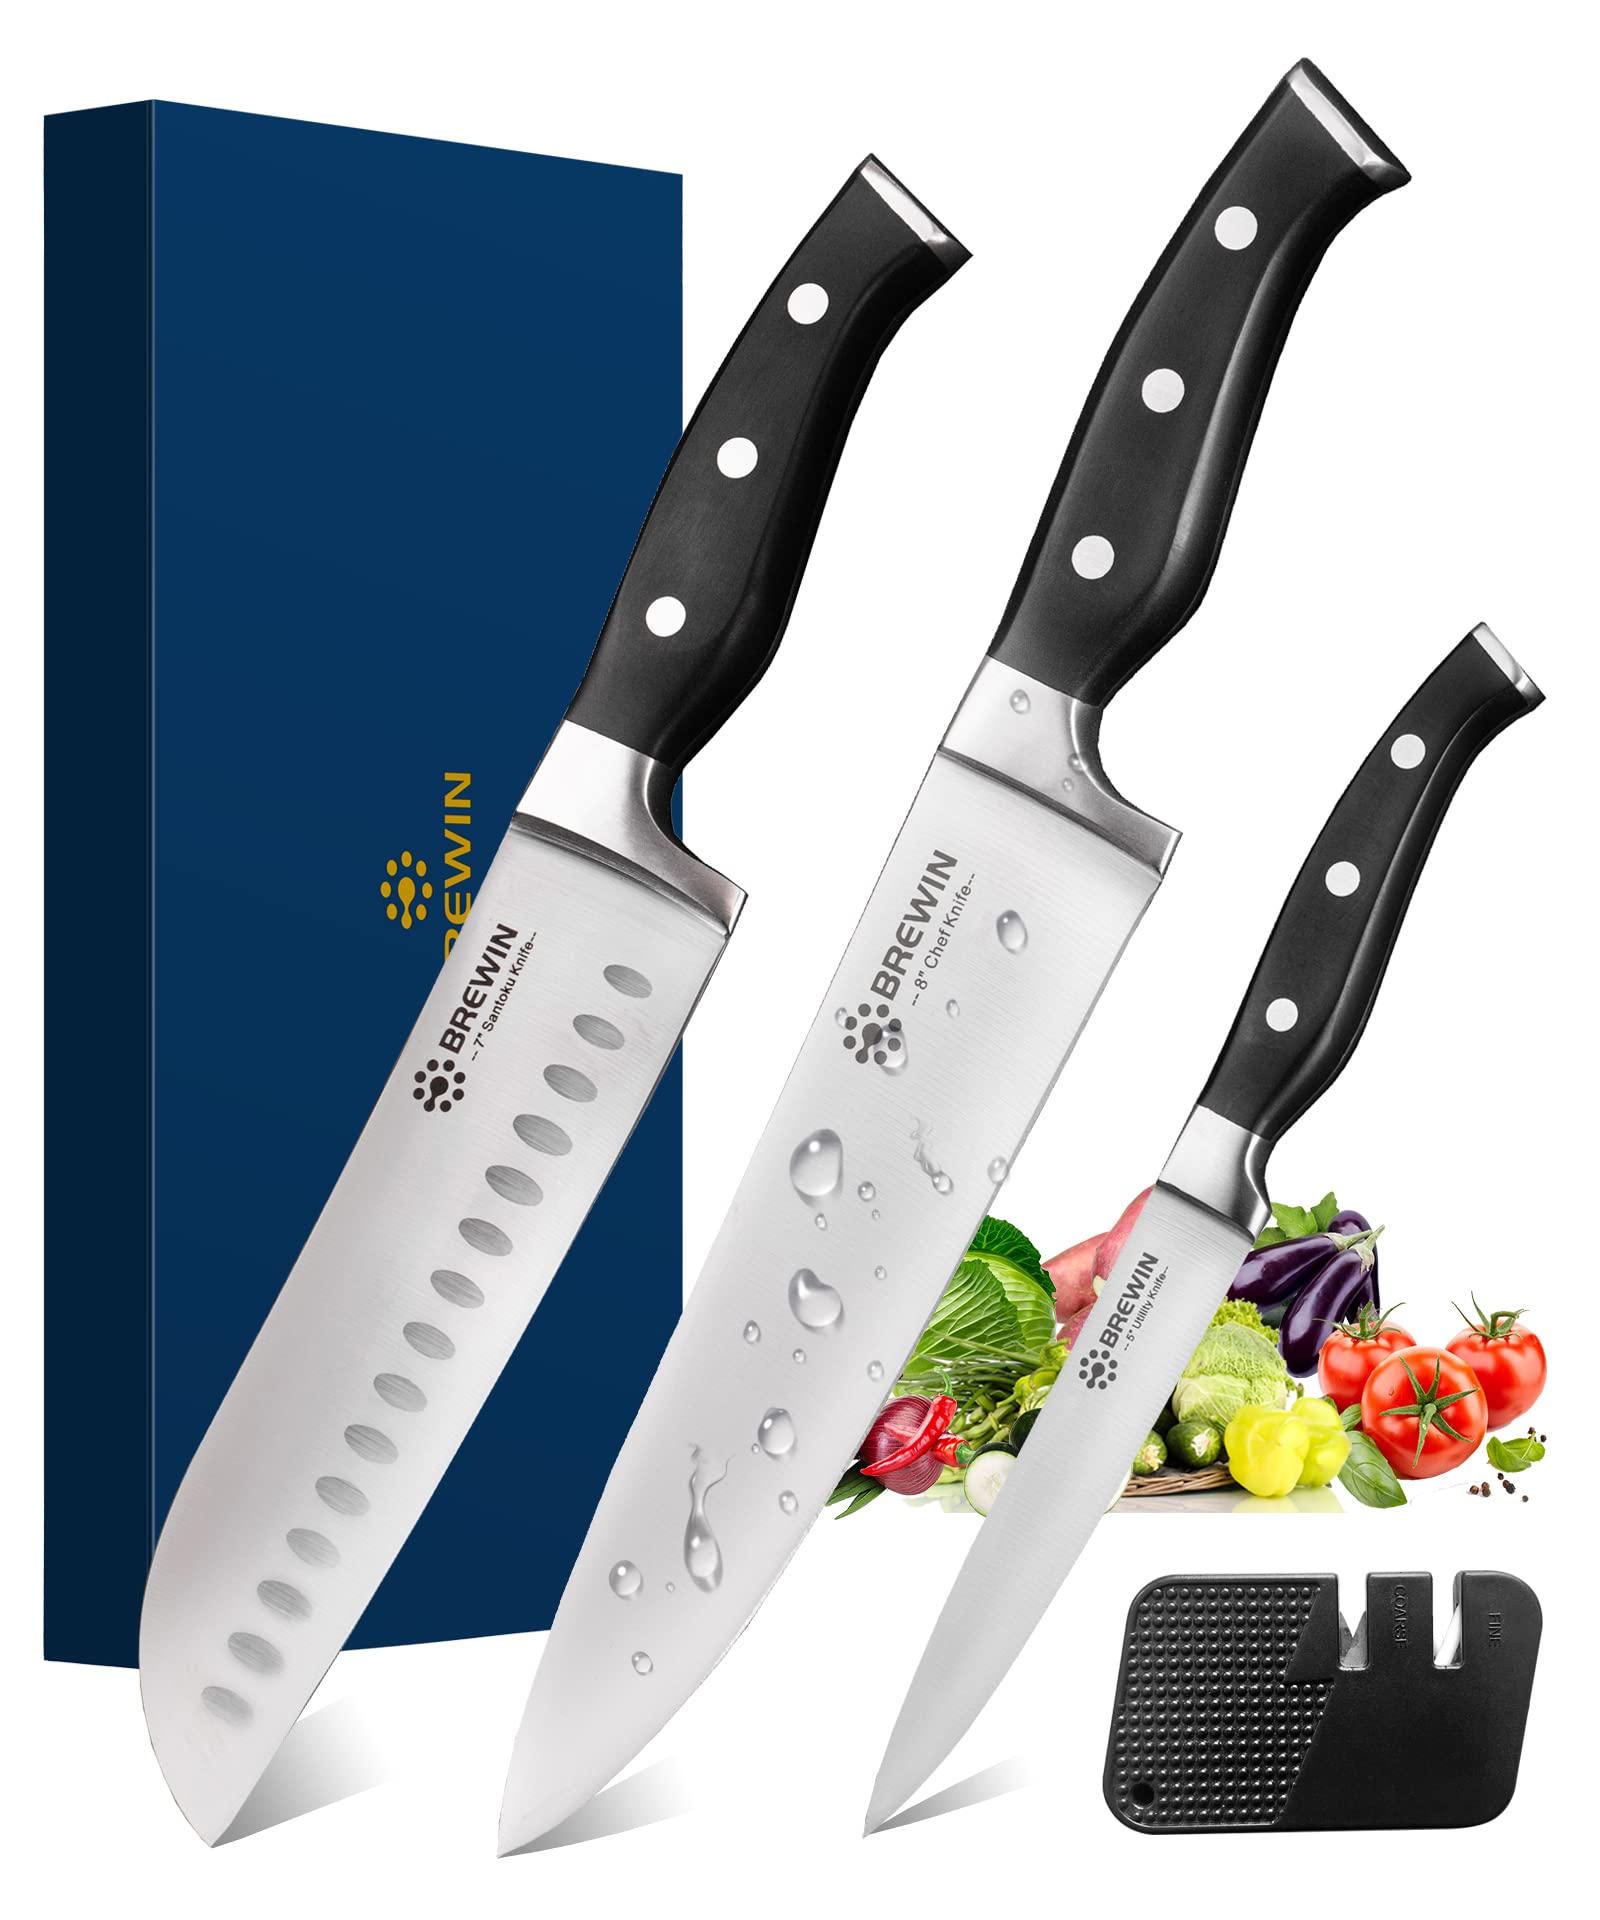 Brewin プロの包丁、シェフナイフ3点セット、キッチン用の鋭いナイフ彫刻セット、高炭素ステンレス鋼、日本料理包丁、ギフトボックス付き